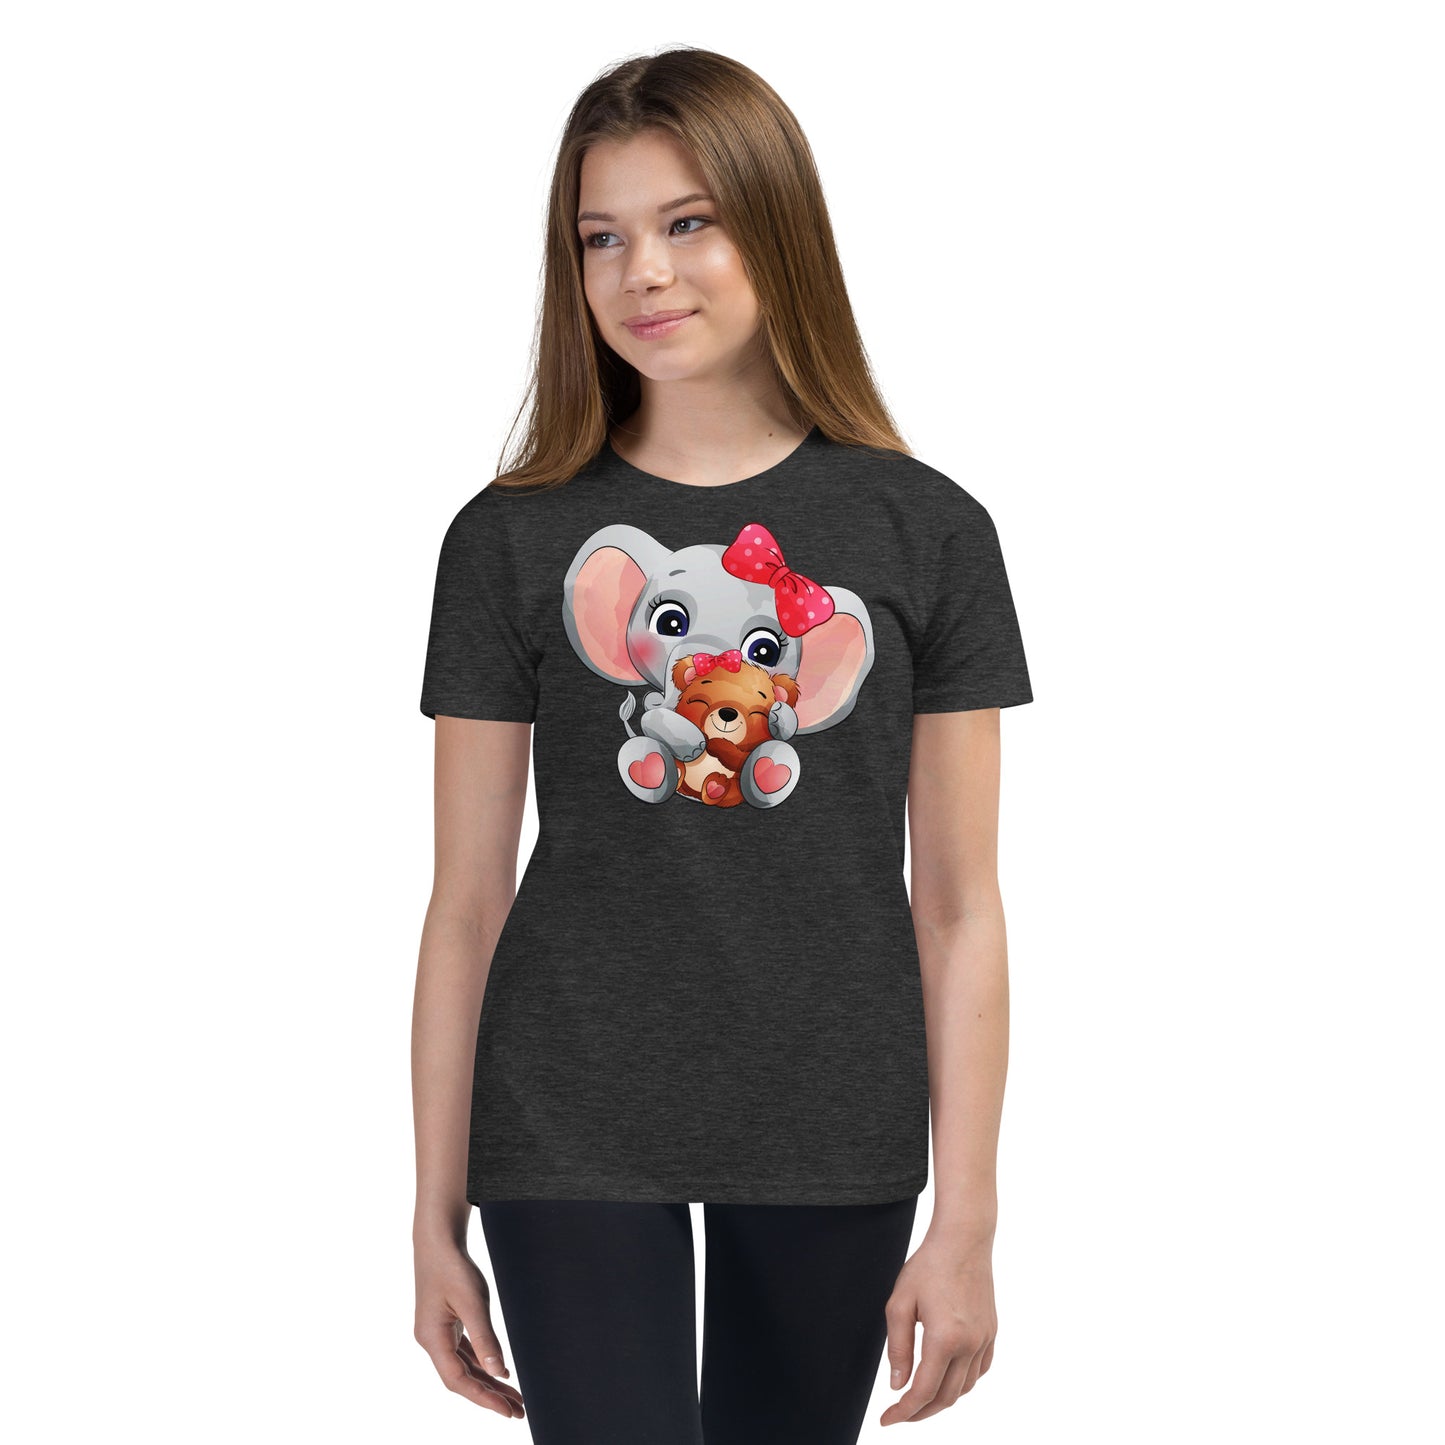 Cute Elephant with Little Bear T-shirt, No. 0012